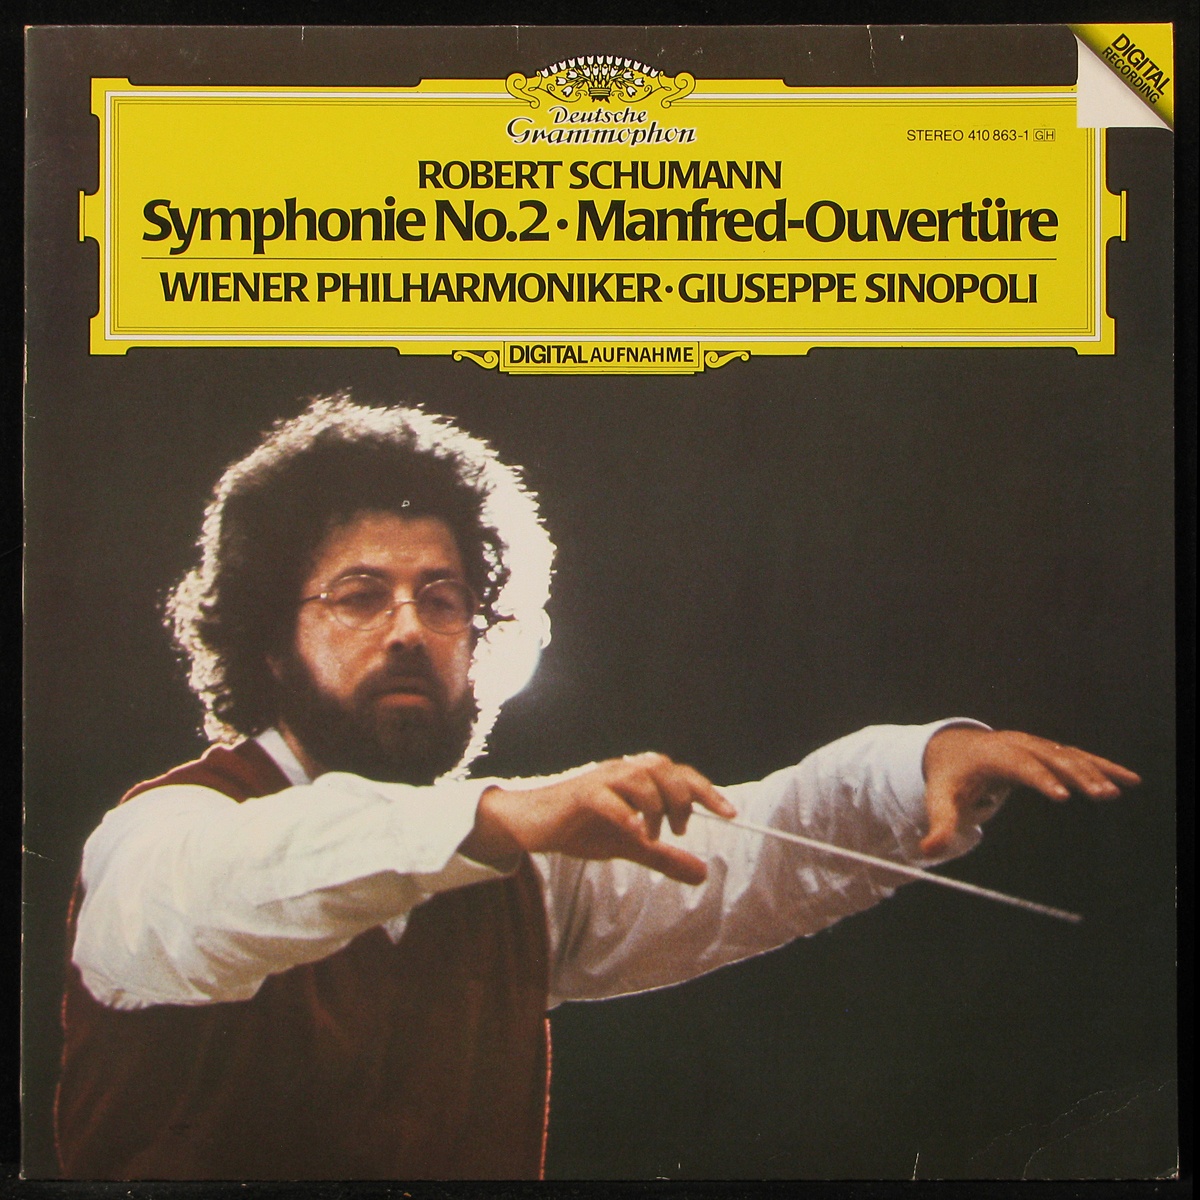 LP Giuseppe Sinopoli — Robert Schumann. Symphonie No. 2 / Manfred-Ouvertüre фото